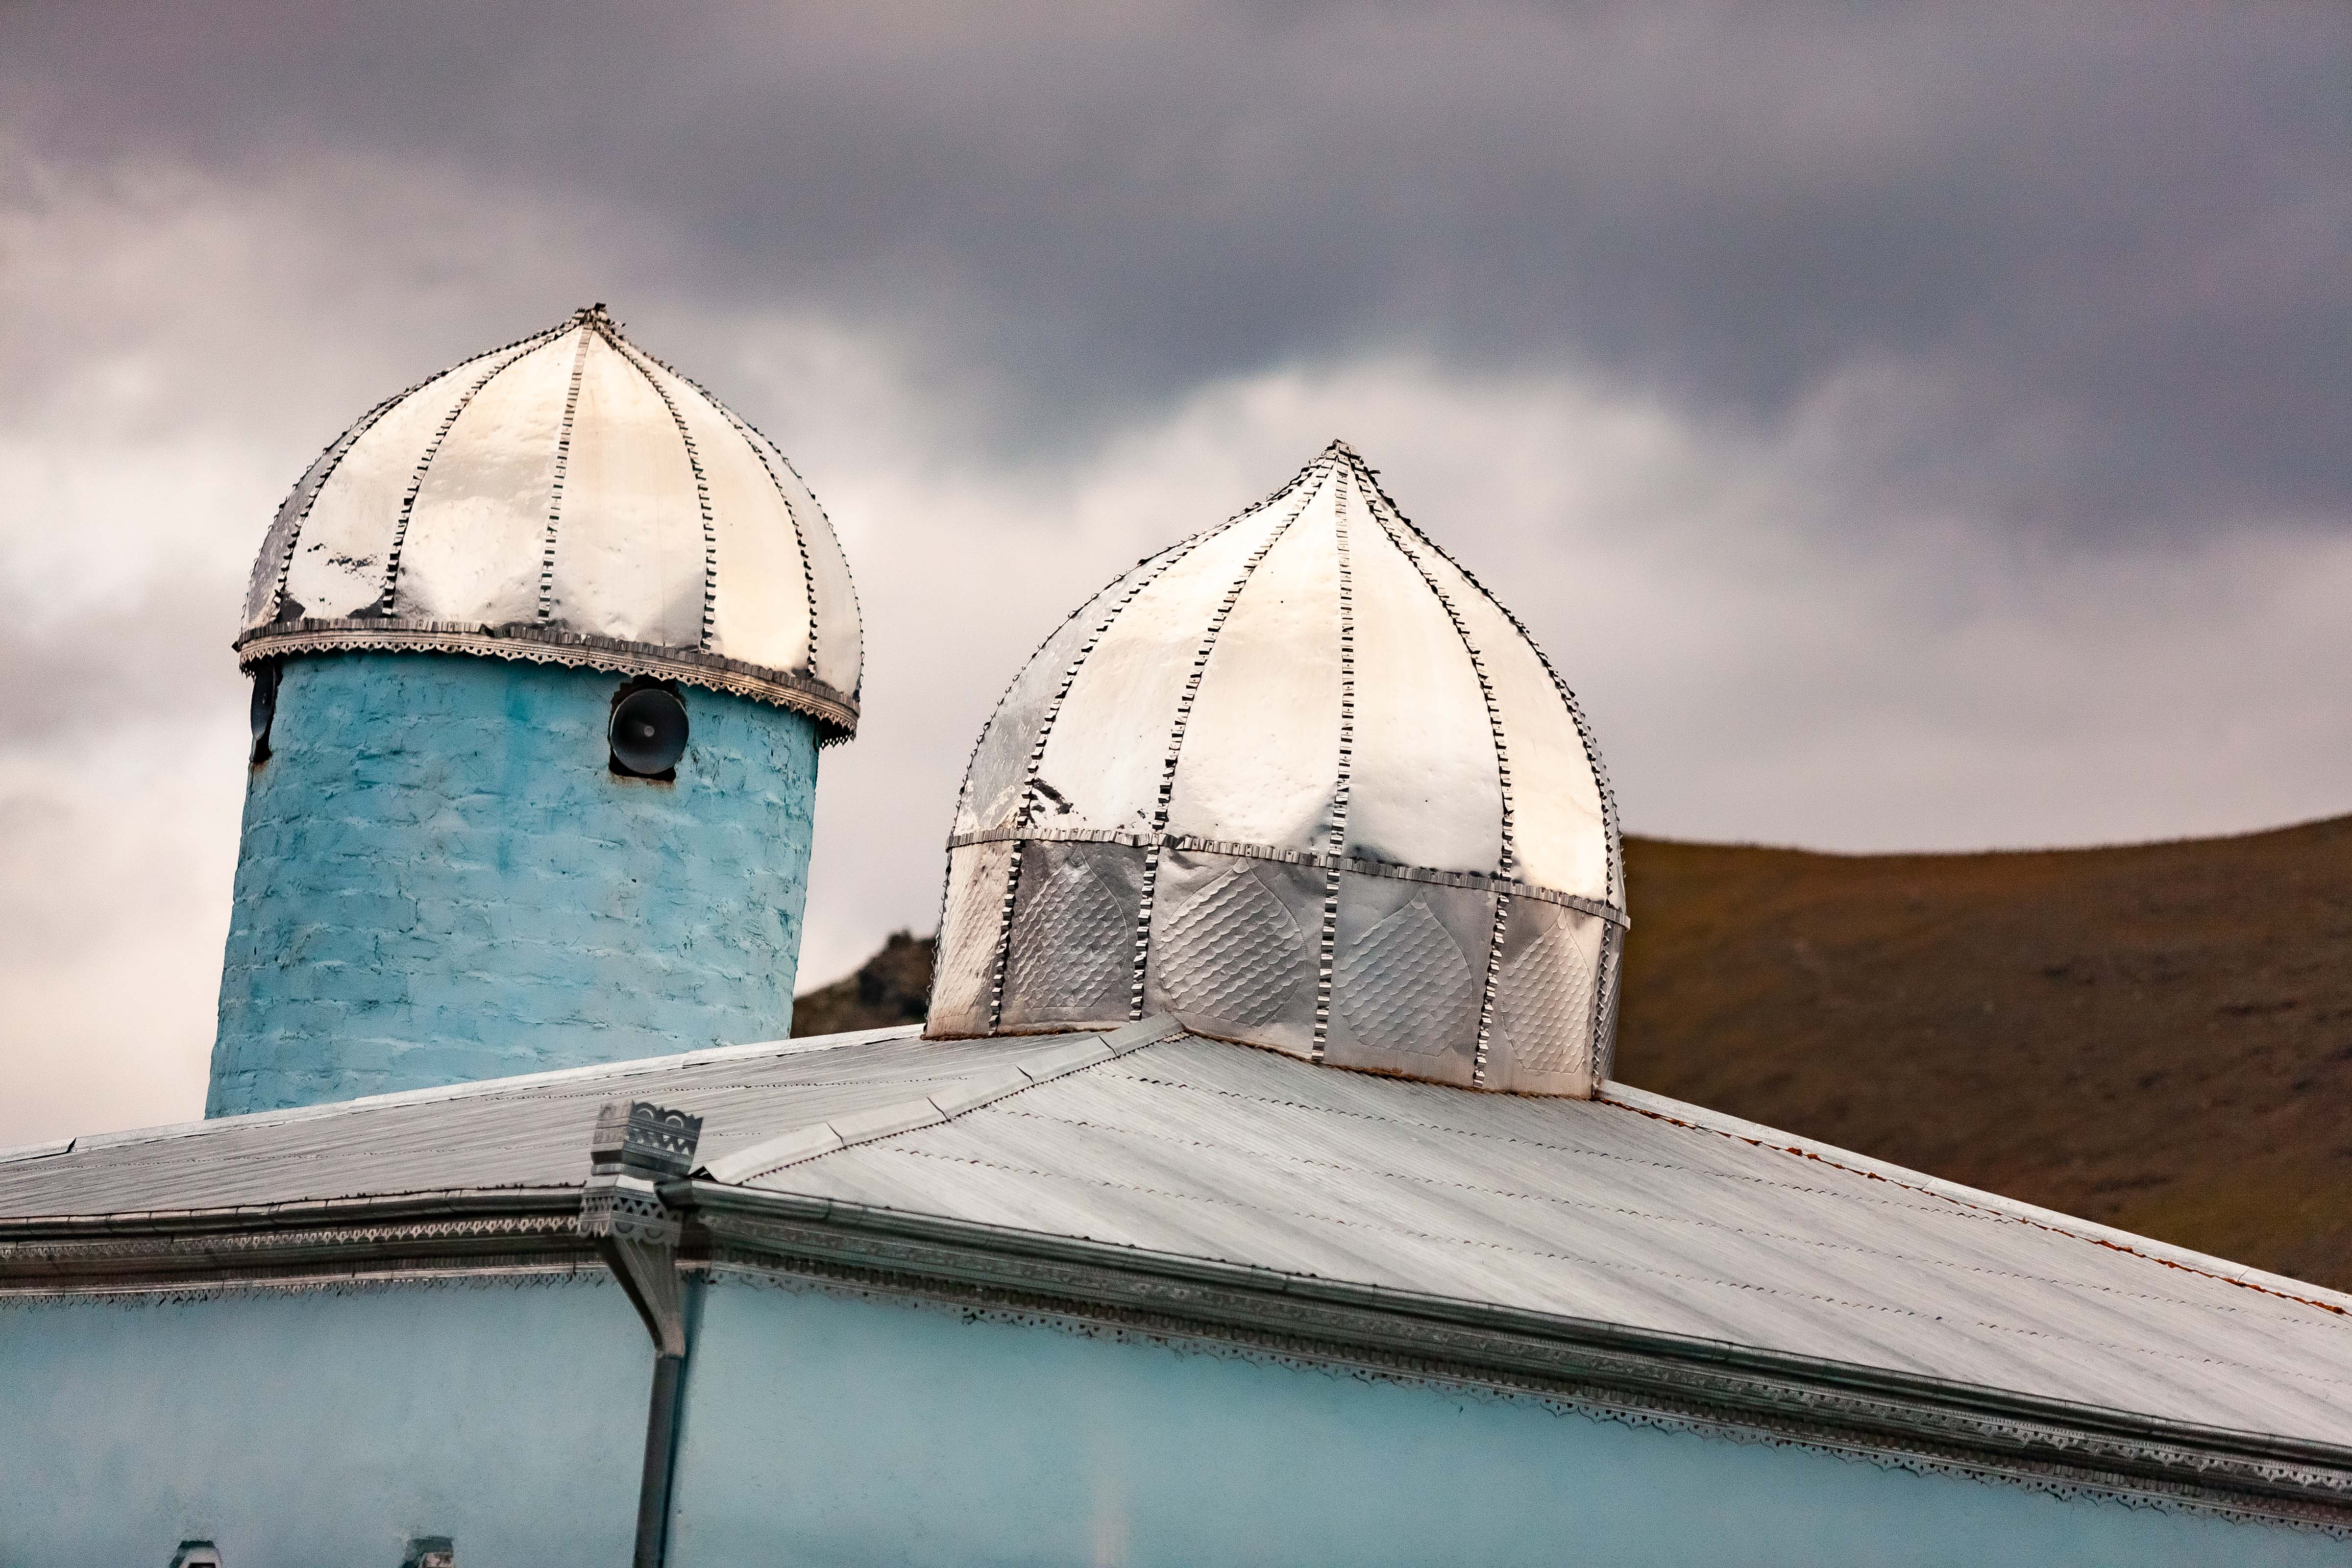 Azerbaijan, Gadabay Prov, Mosque Roof, 2009, IMG 8940